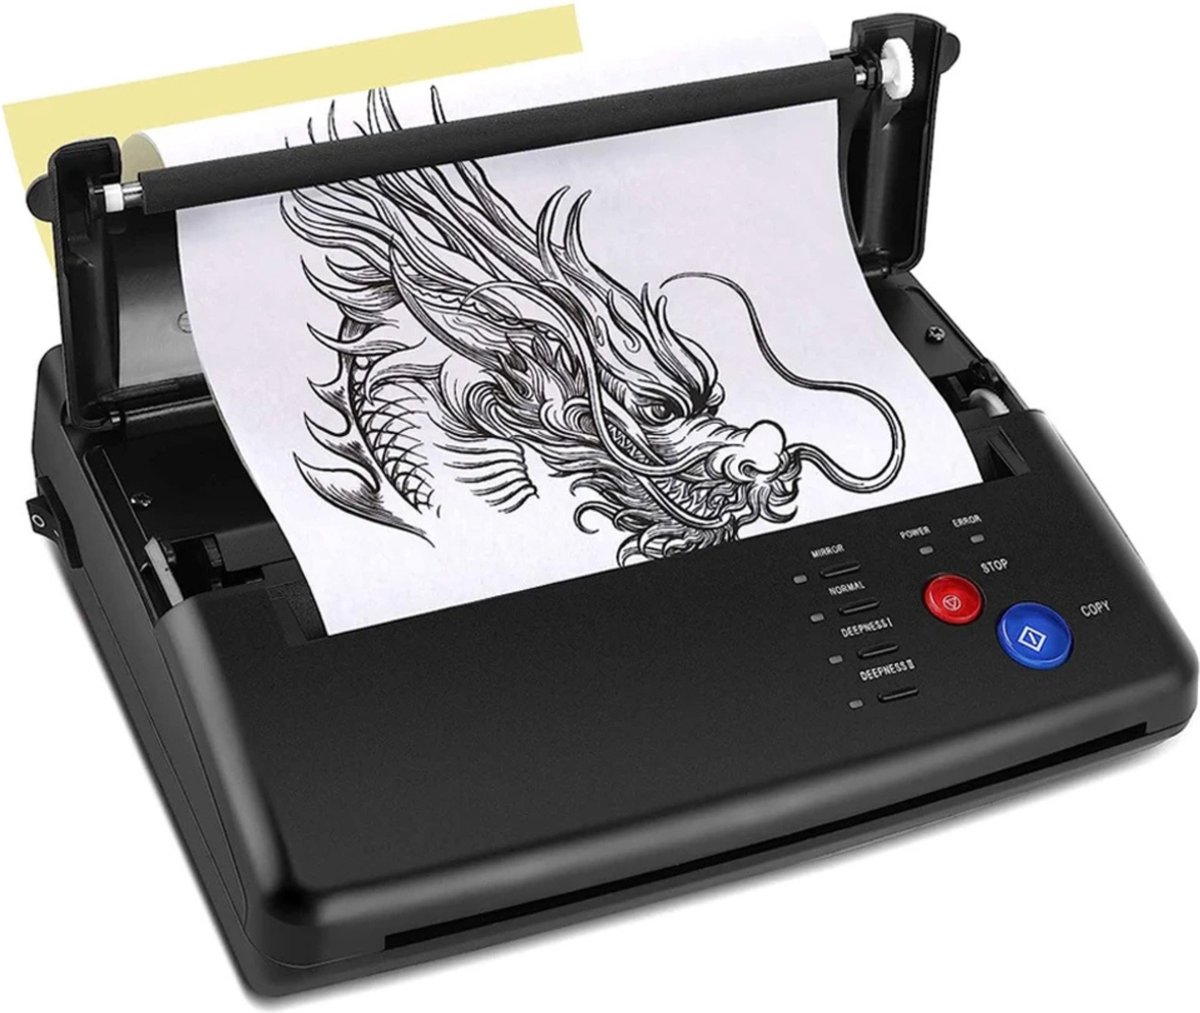 Tattoo Stencil Printer – Tattoo Printer – Thermische Printer - Professionele Thermische Tattoo Printer - Inclusief Transfer Papier